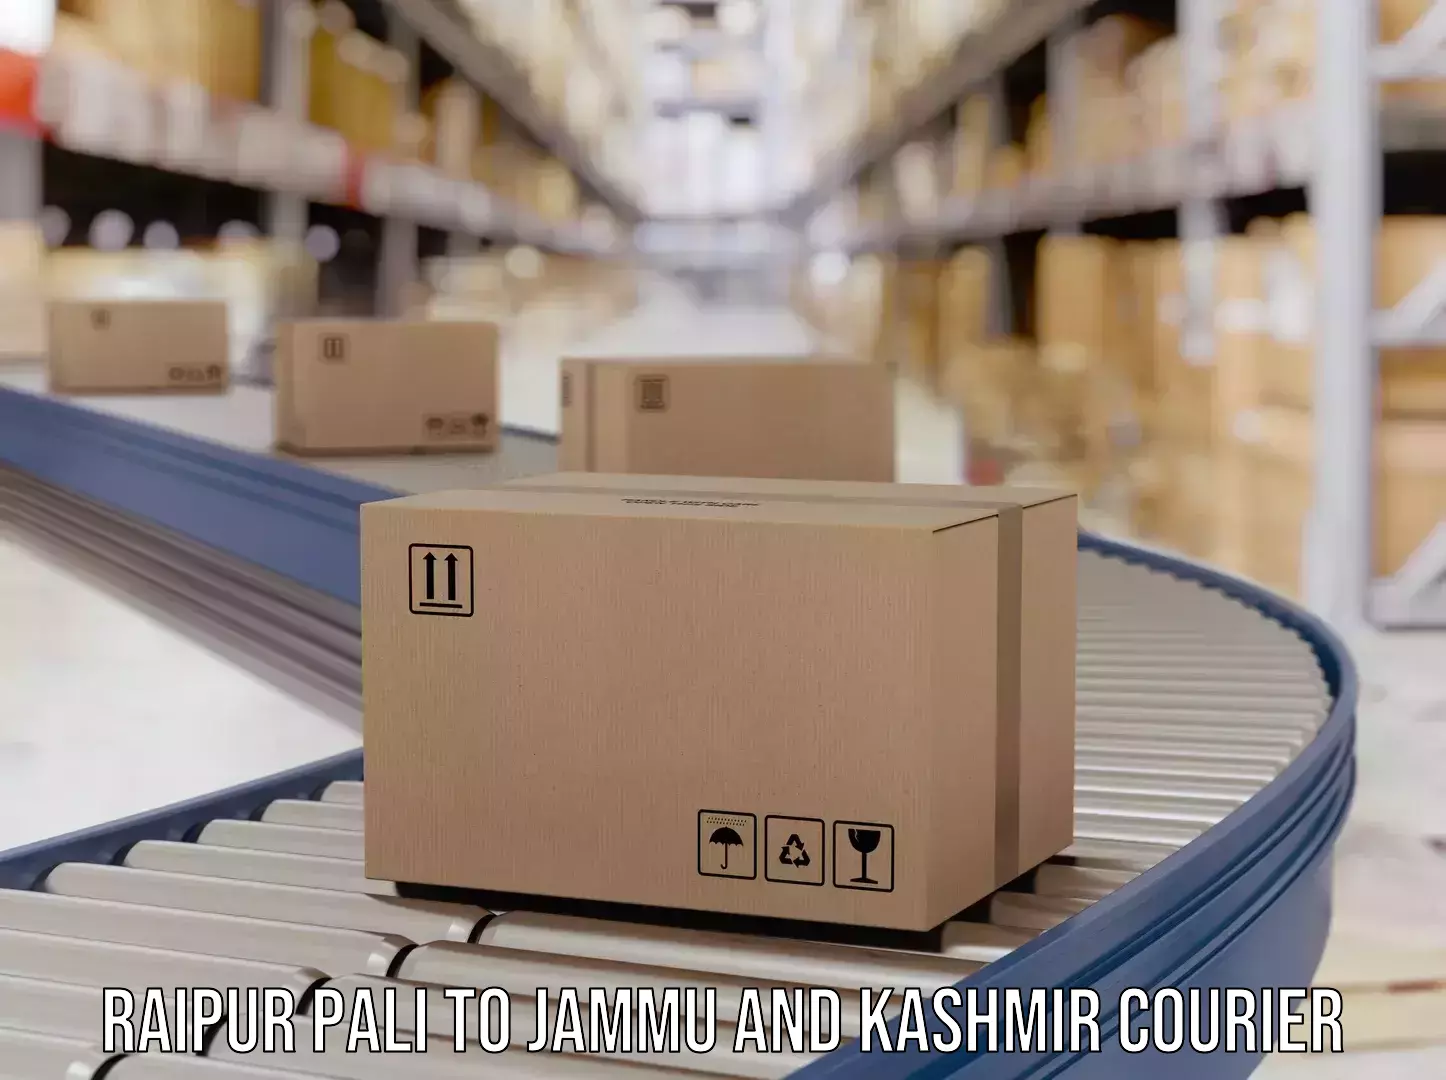 Round-the-clock parcel delivery Raipur Pali to Srinagar Kashmir